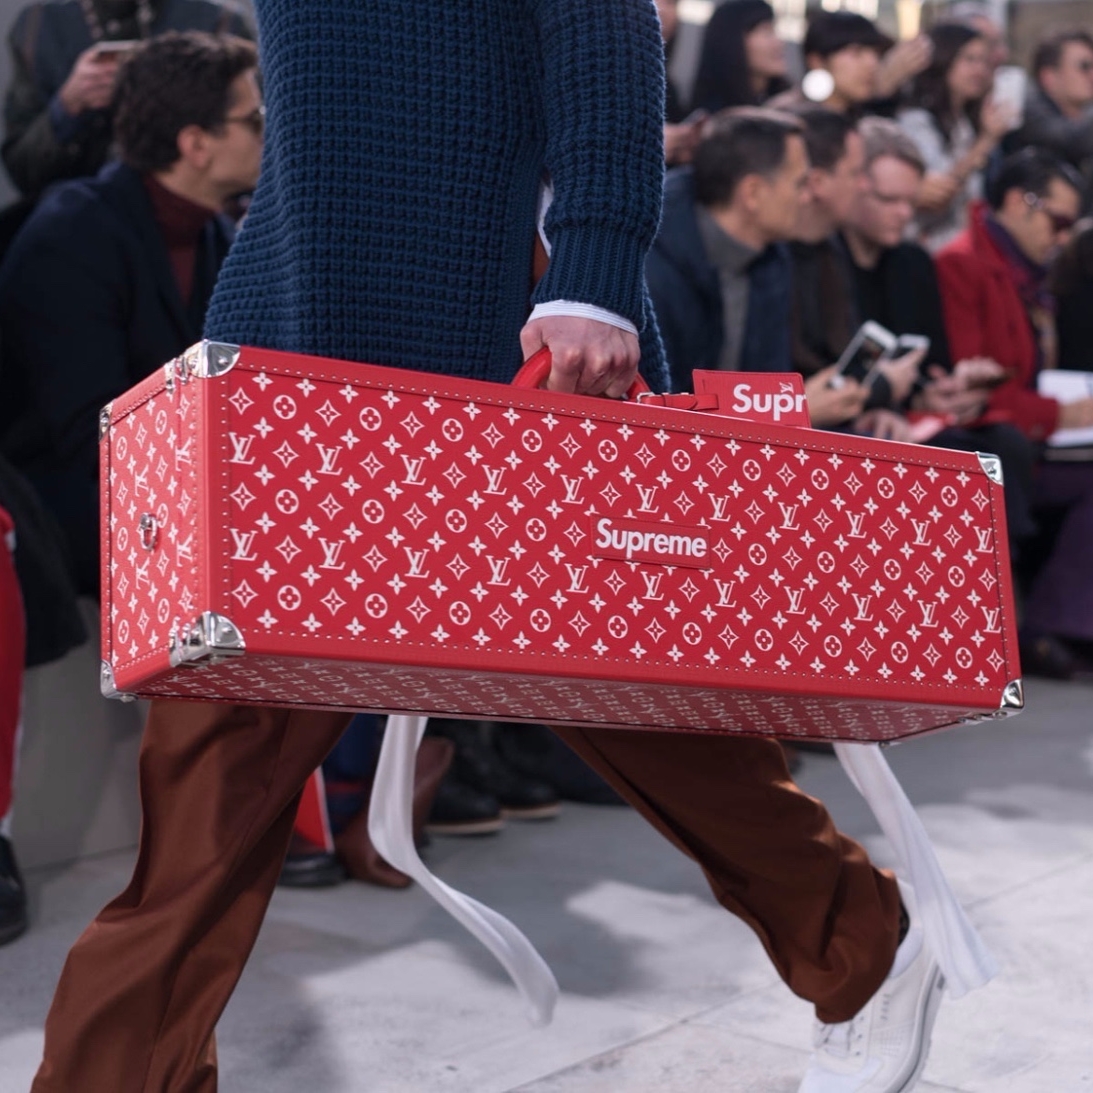 Supreme x Louis Vuitton 紐約 Pop-Up 店舖申請慘遭社區委員會否決